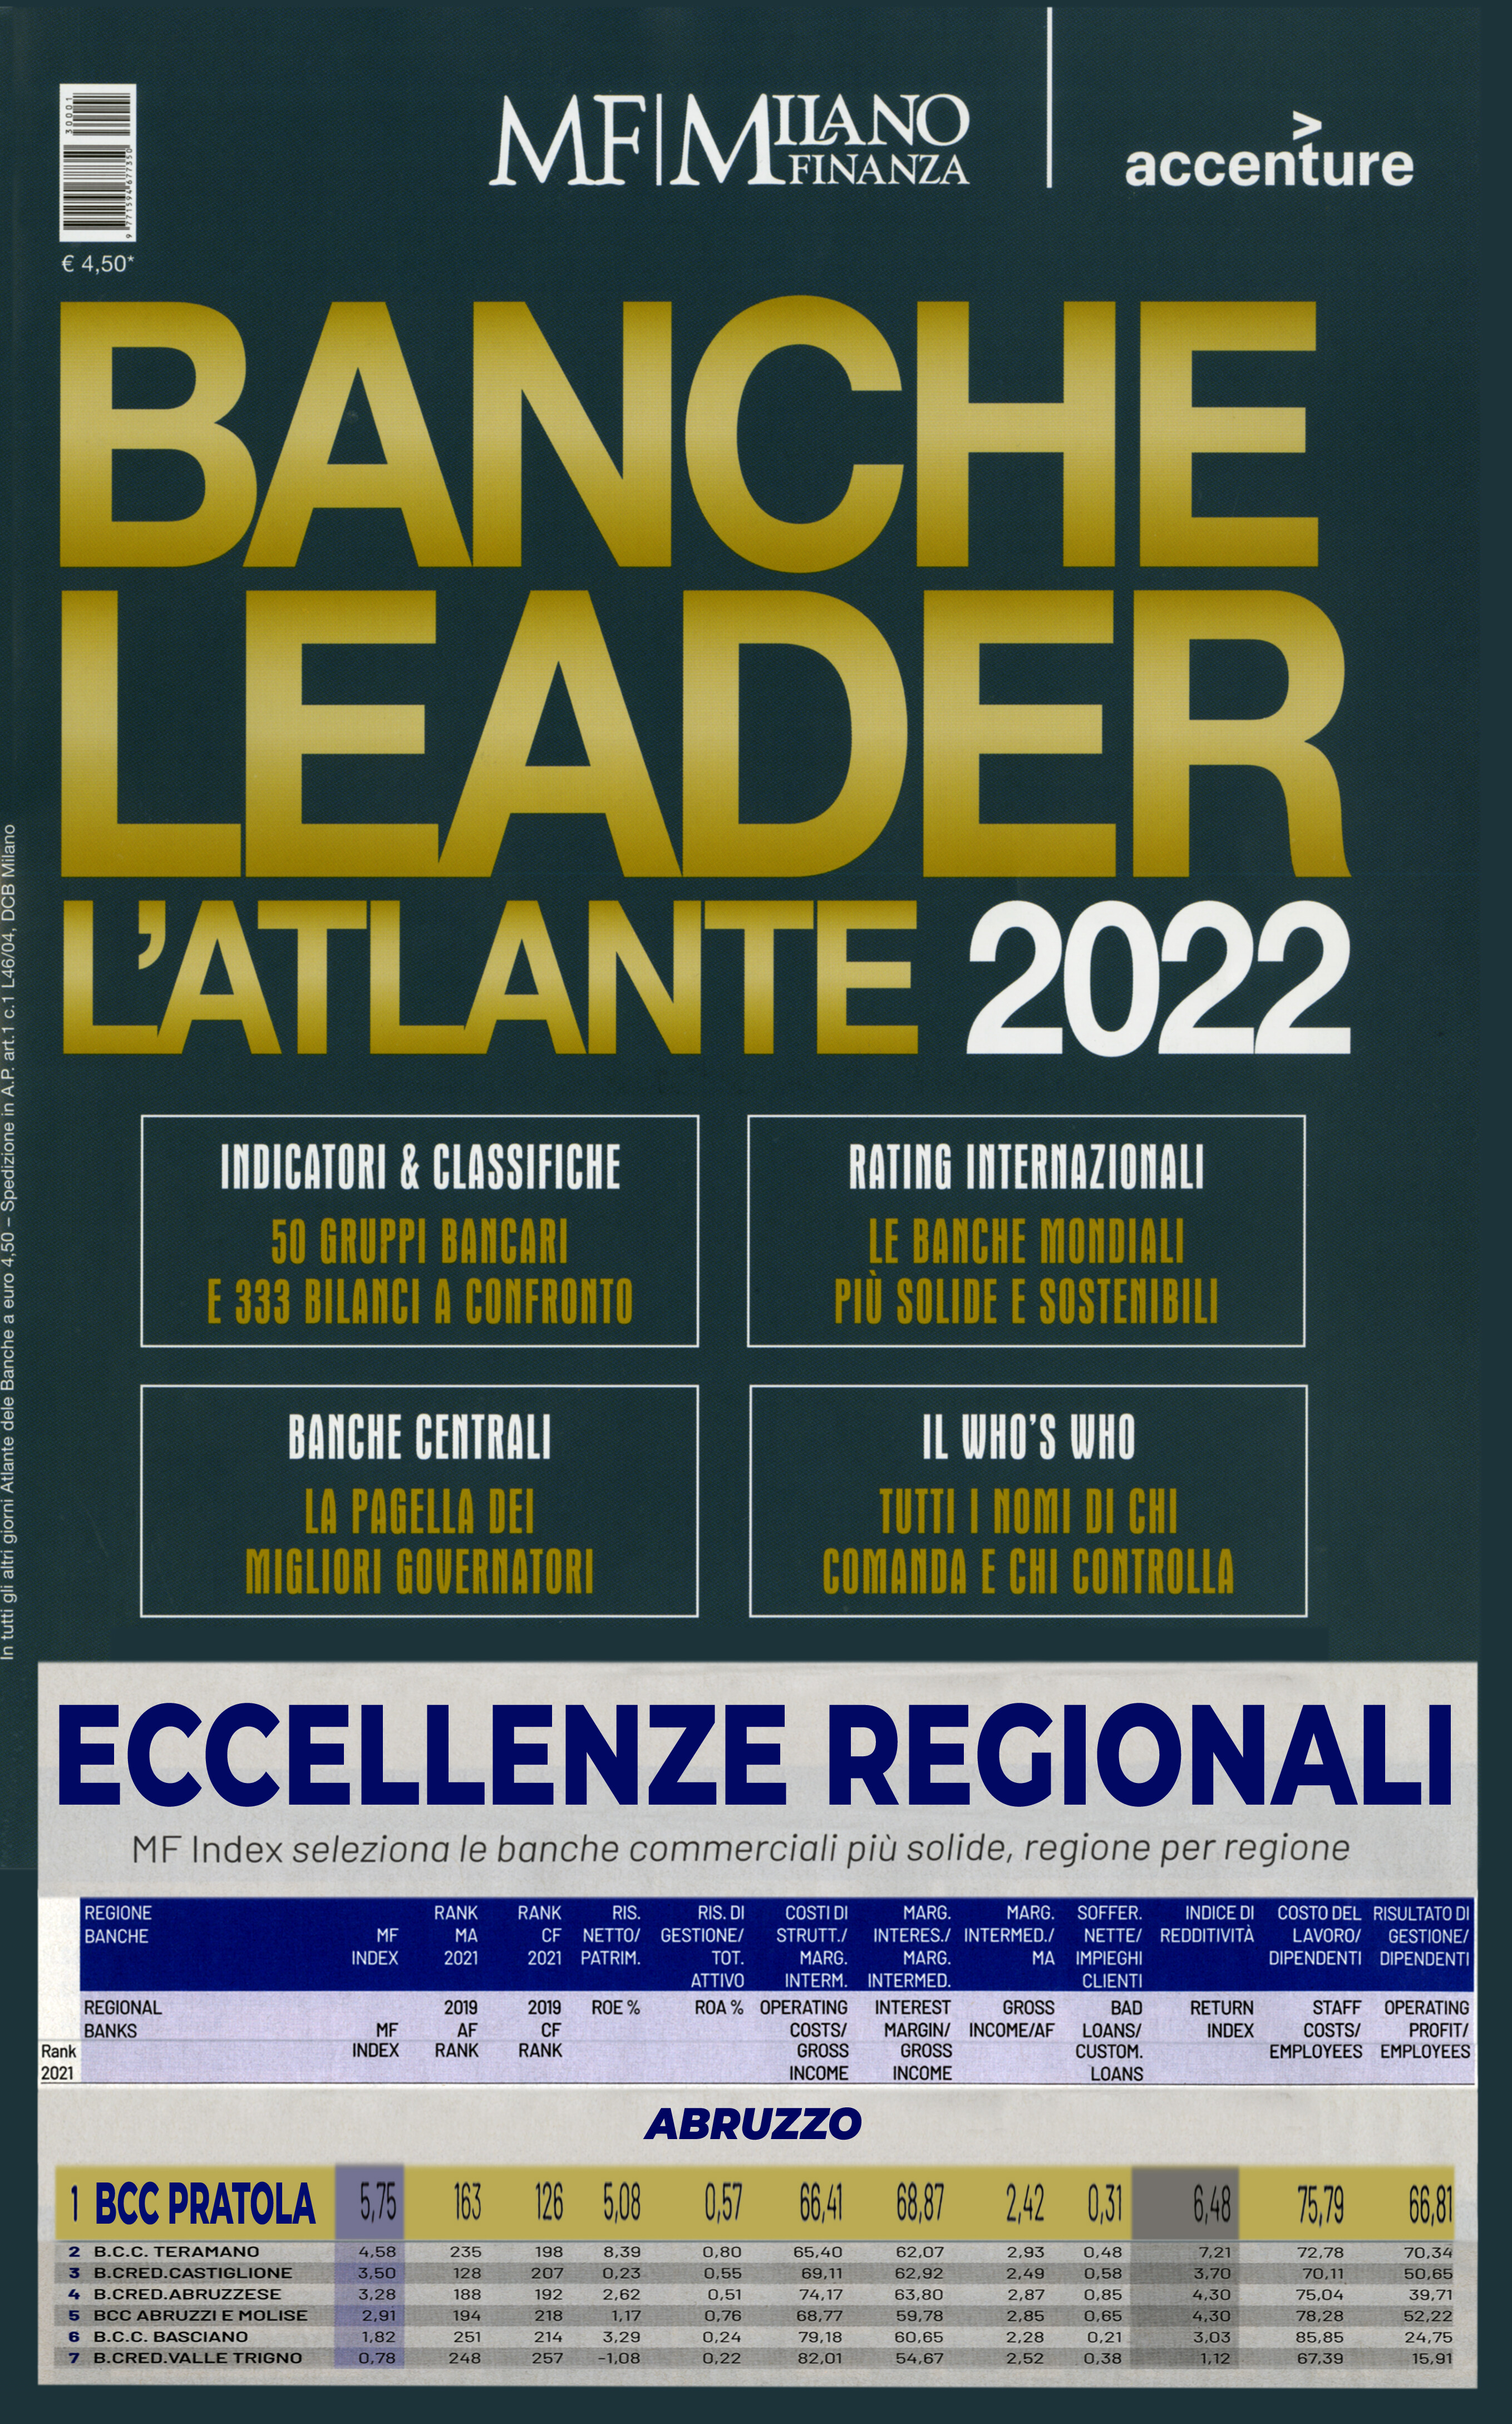 Atlante banche leader 2022